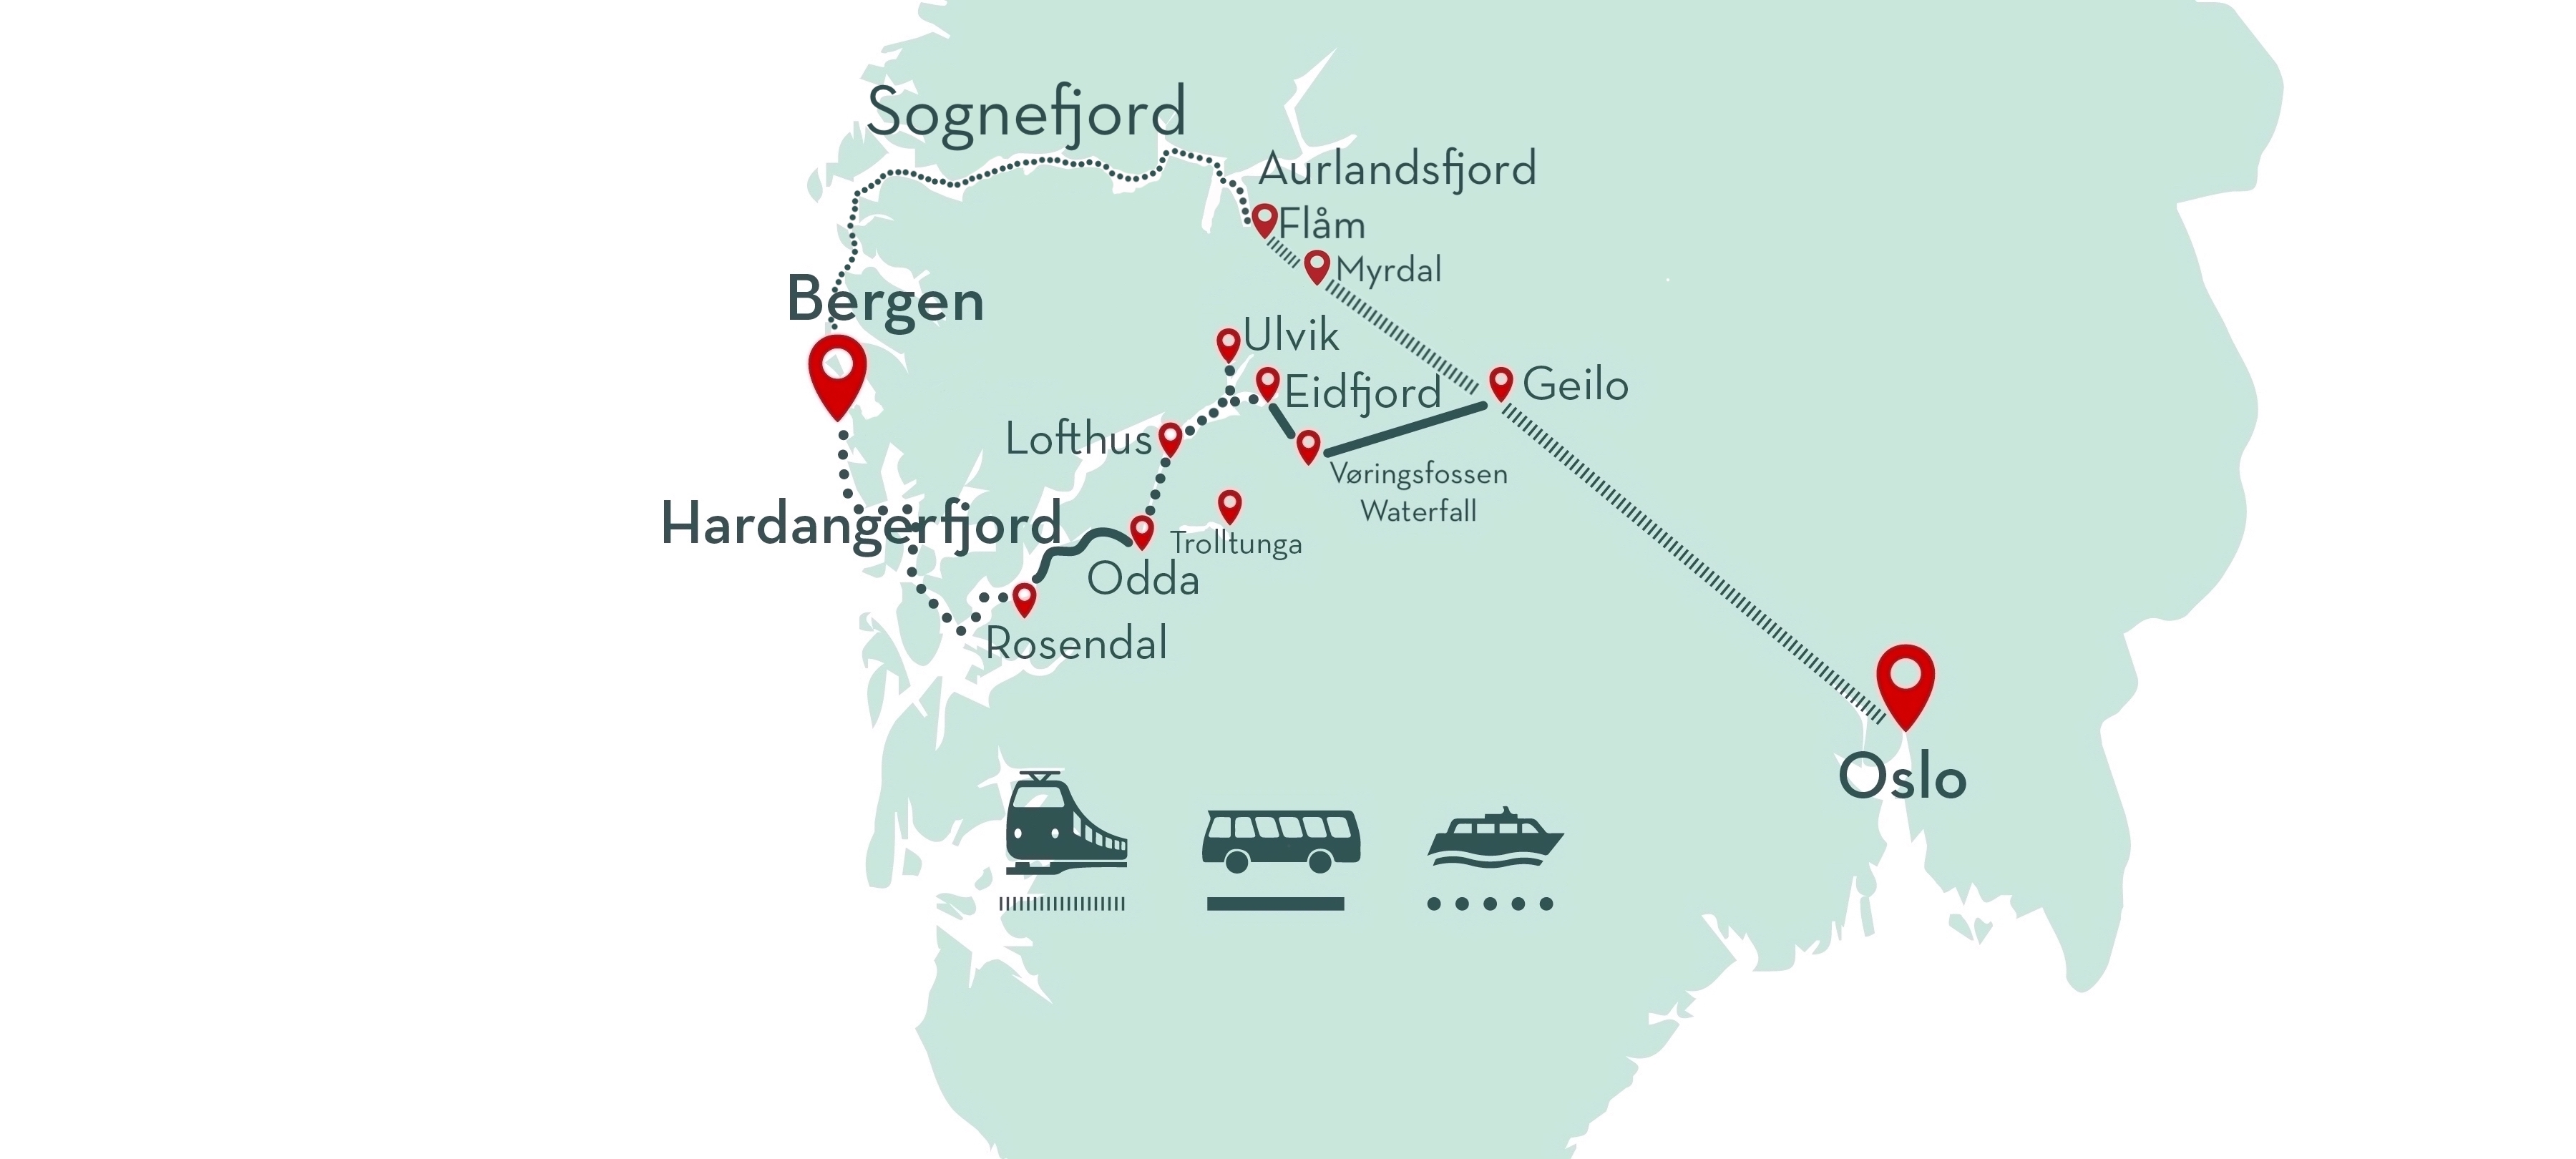 Sognefjord mit Hardangerfjord